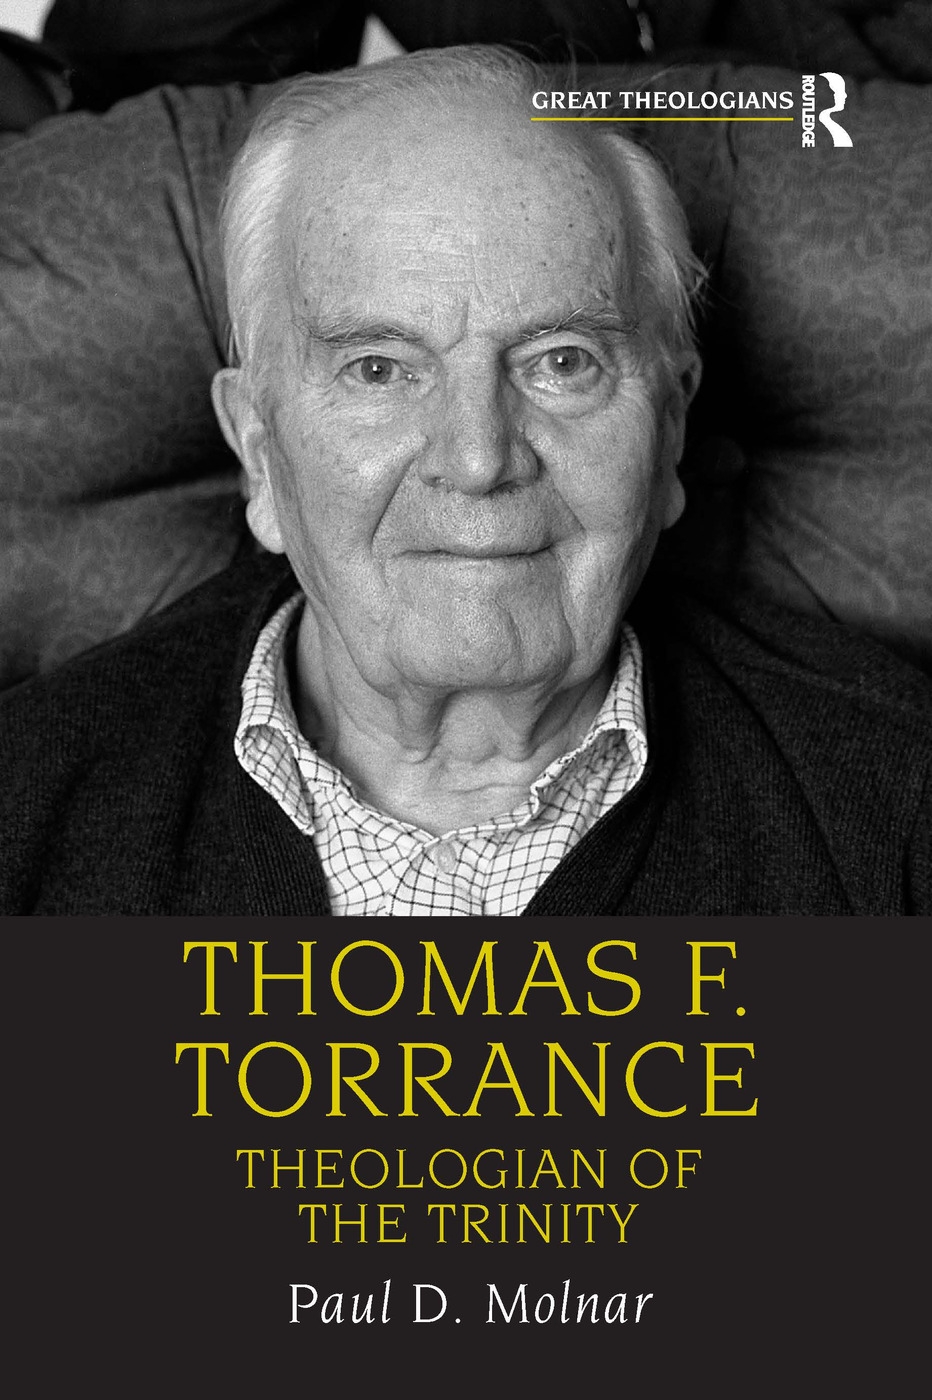 Thomas F. Torrance: Theologian of the Trinity. by Paul D. Molnar